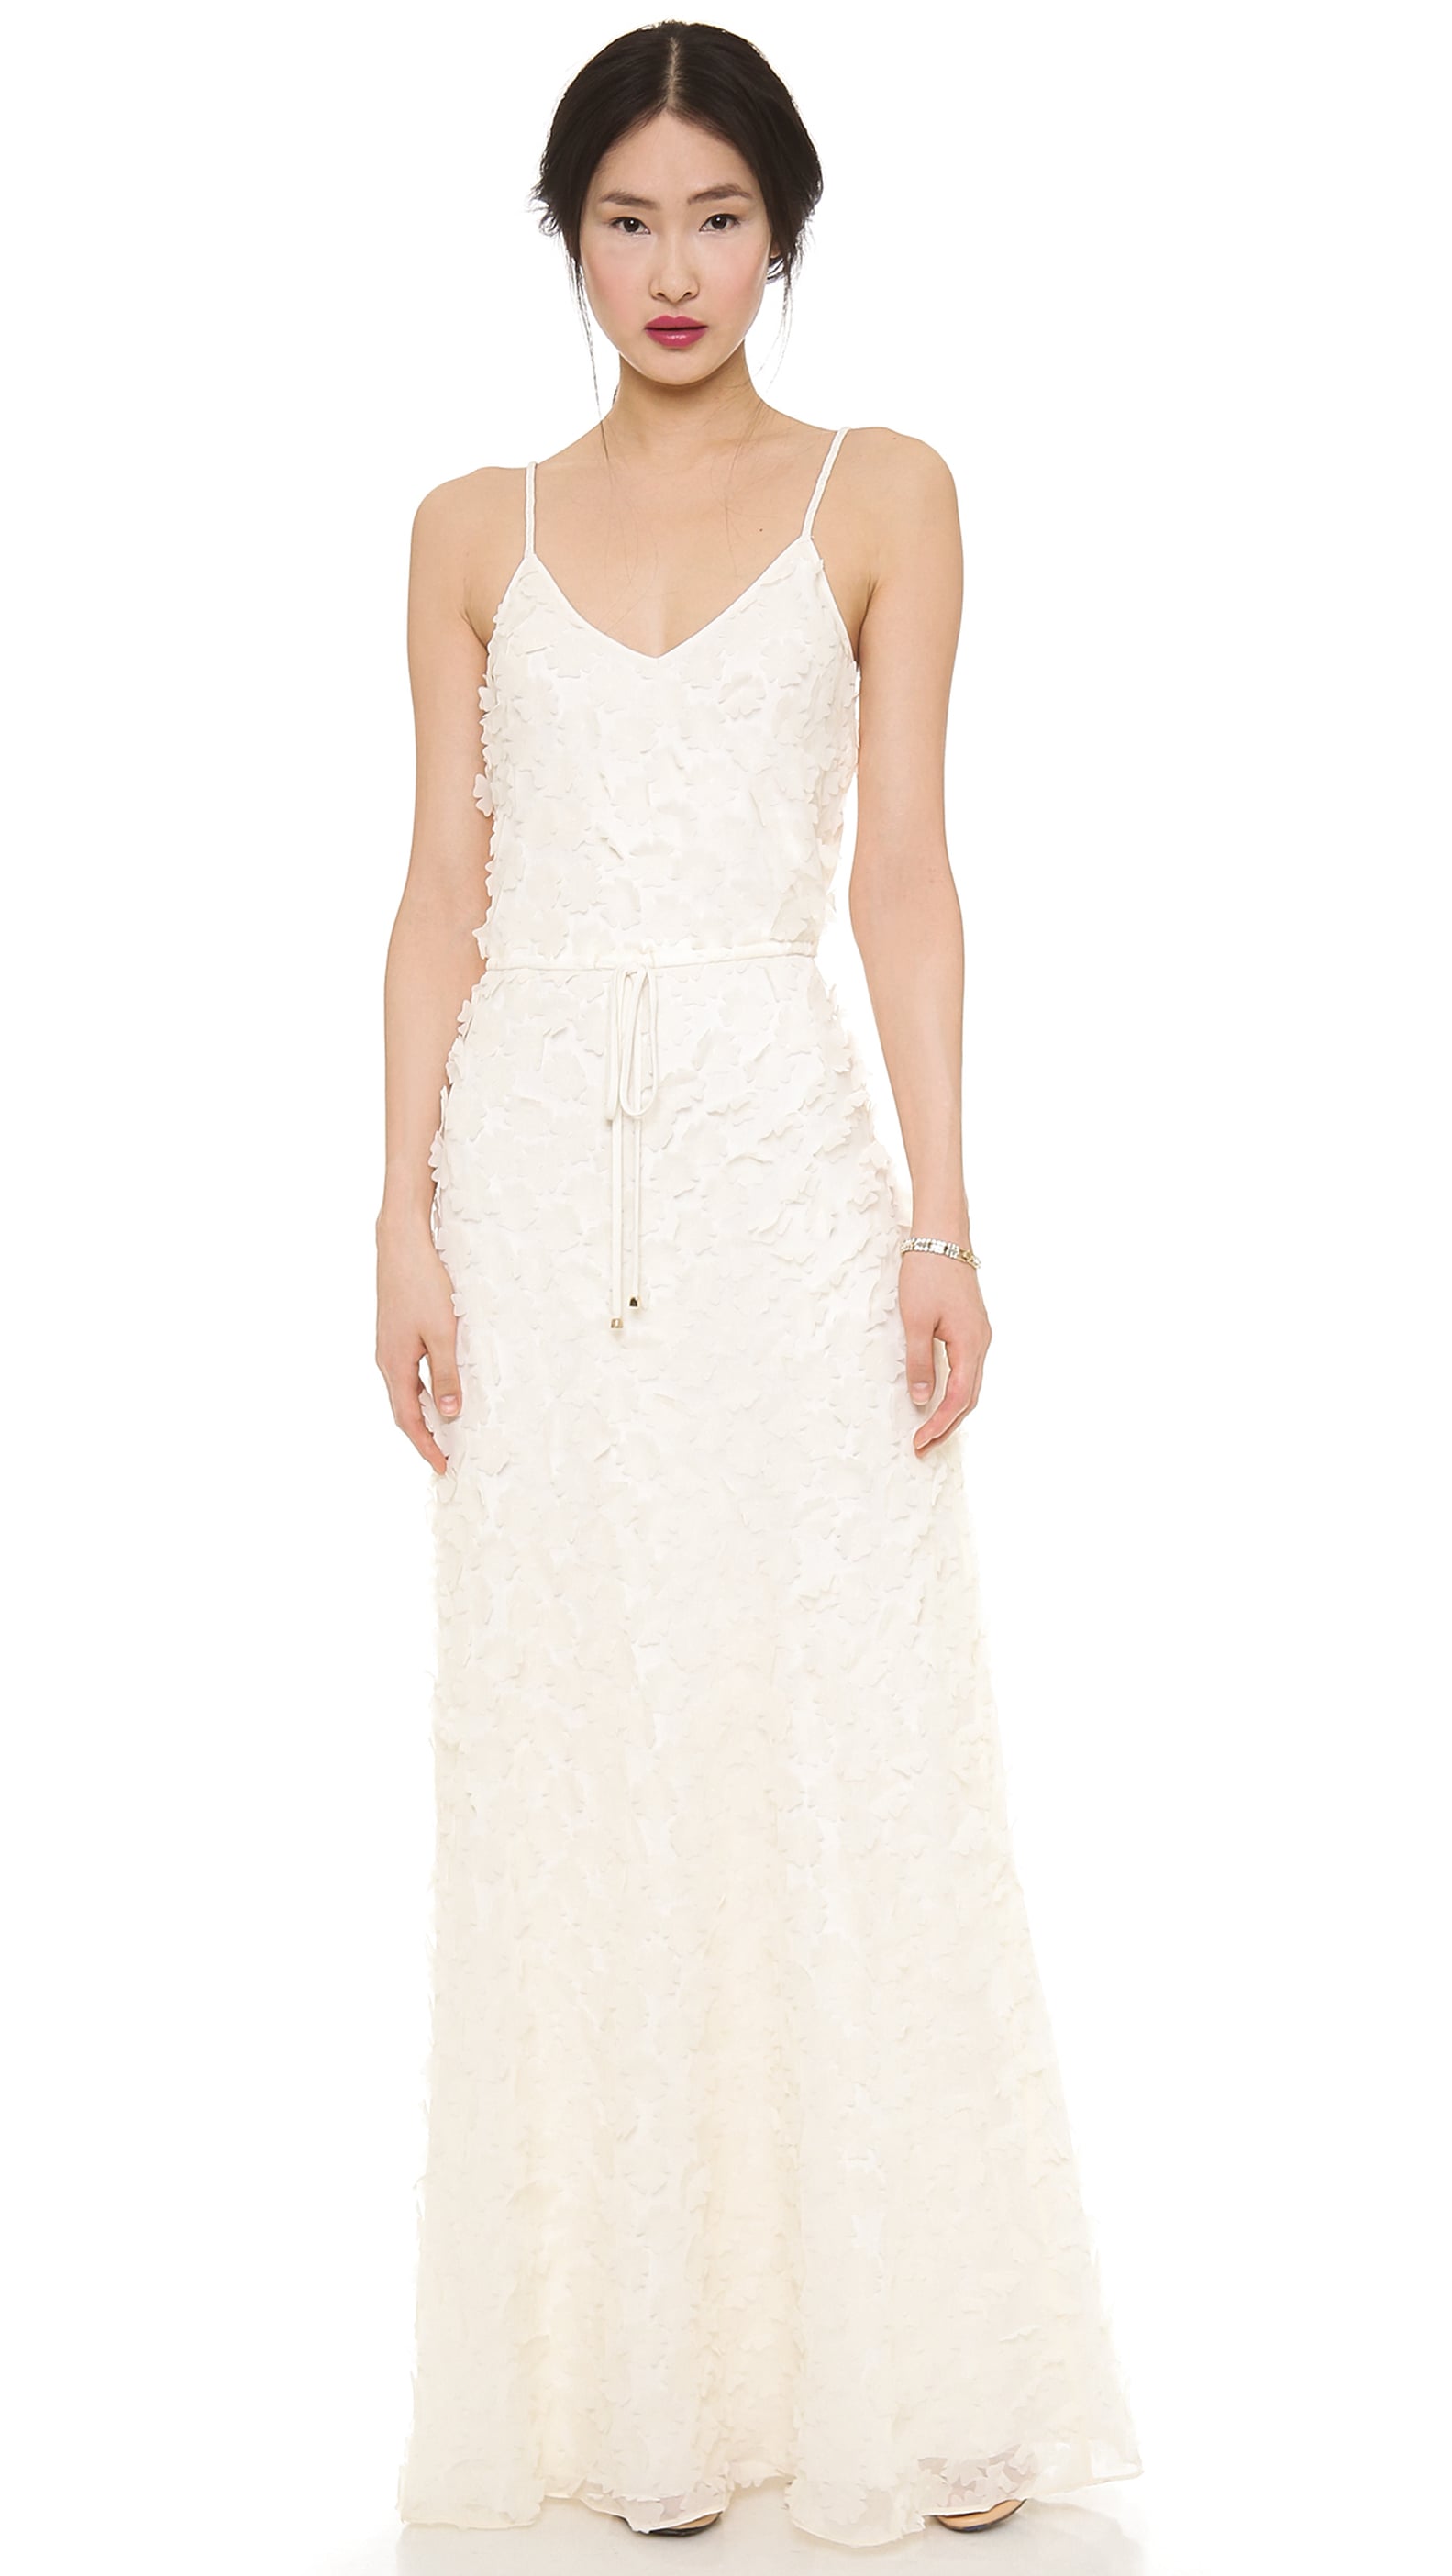 Wedding Dresses For Sale on Shopbop | POPSUGAR Fashion